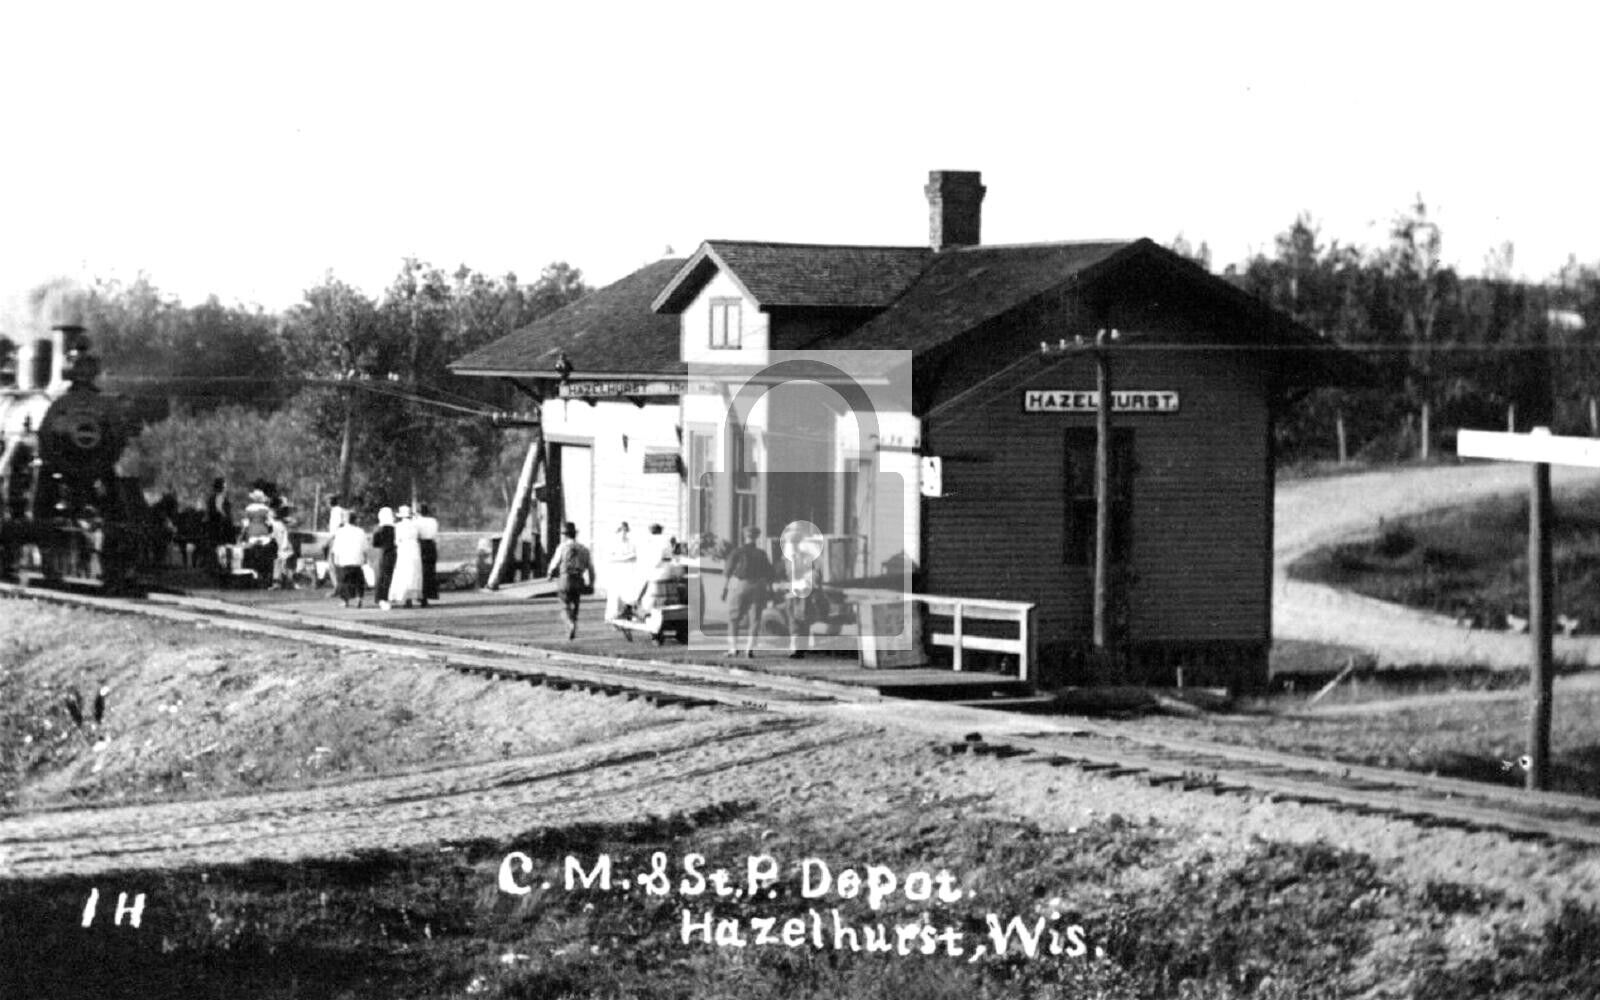 Railroad Train Station Depot Hazelhurst Wisconsin WI - 8x10 Reprint